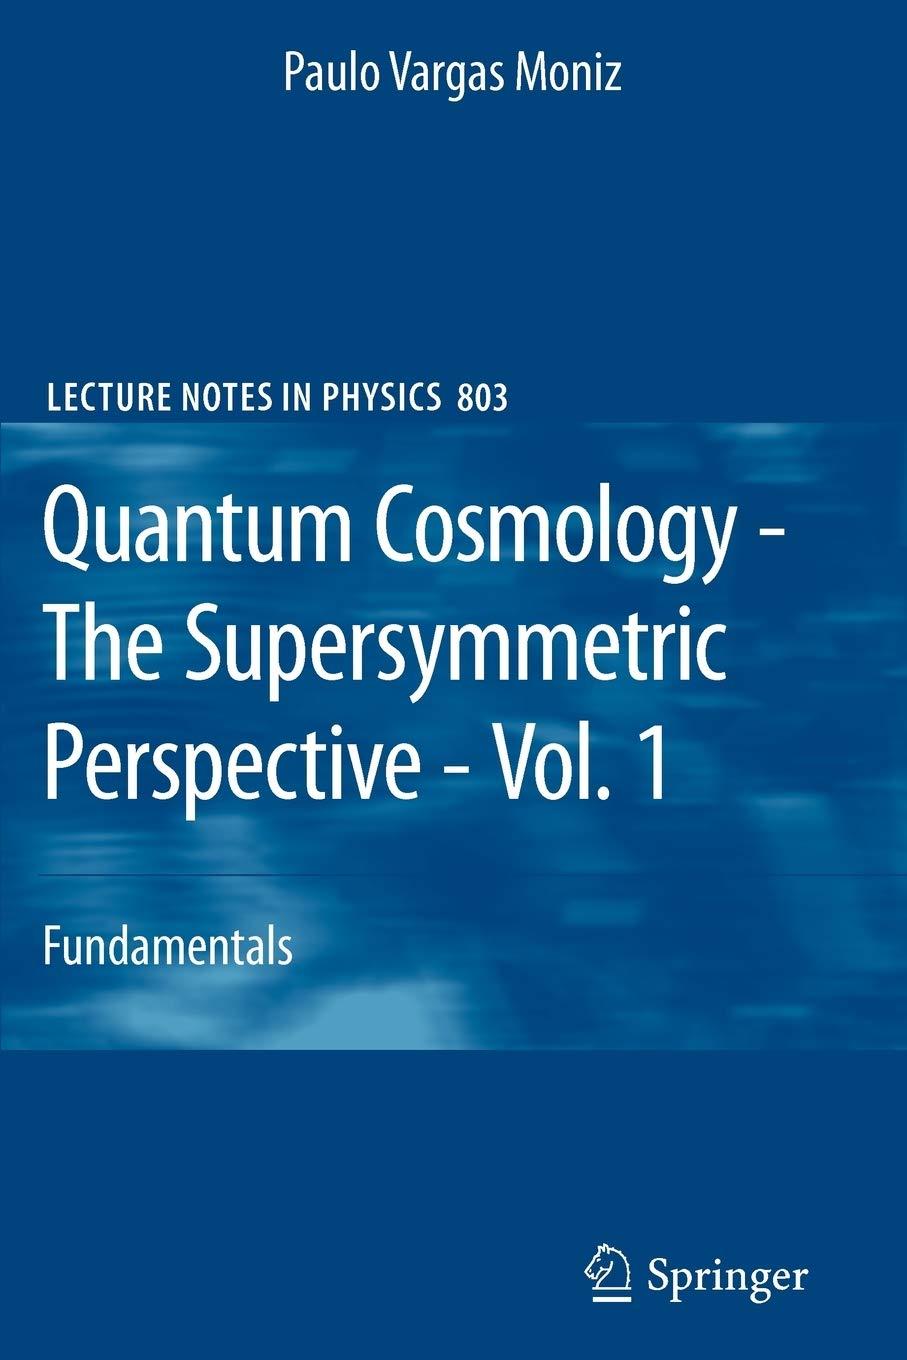 quantum cosmology the supersymmetric perspective vol. 1 fundamentals 1st edition paulo vargas moniz